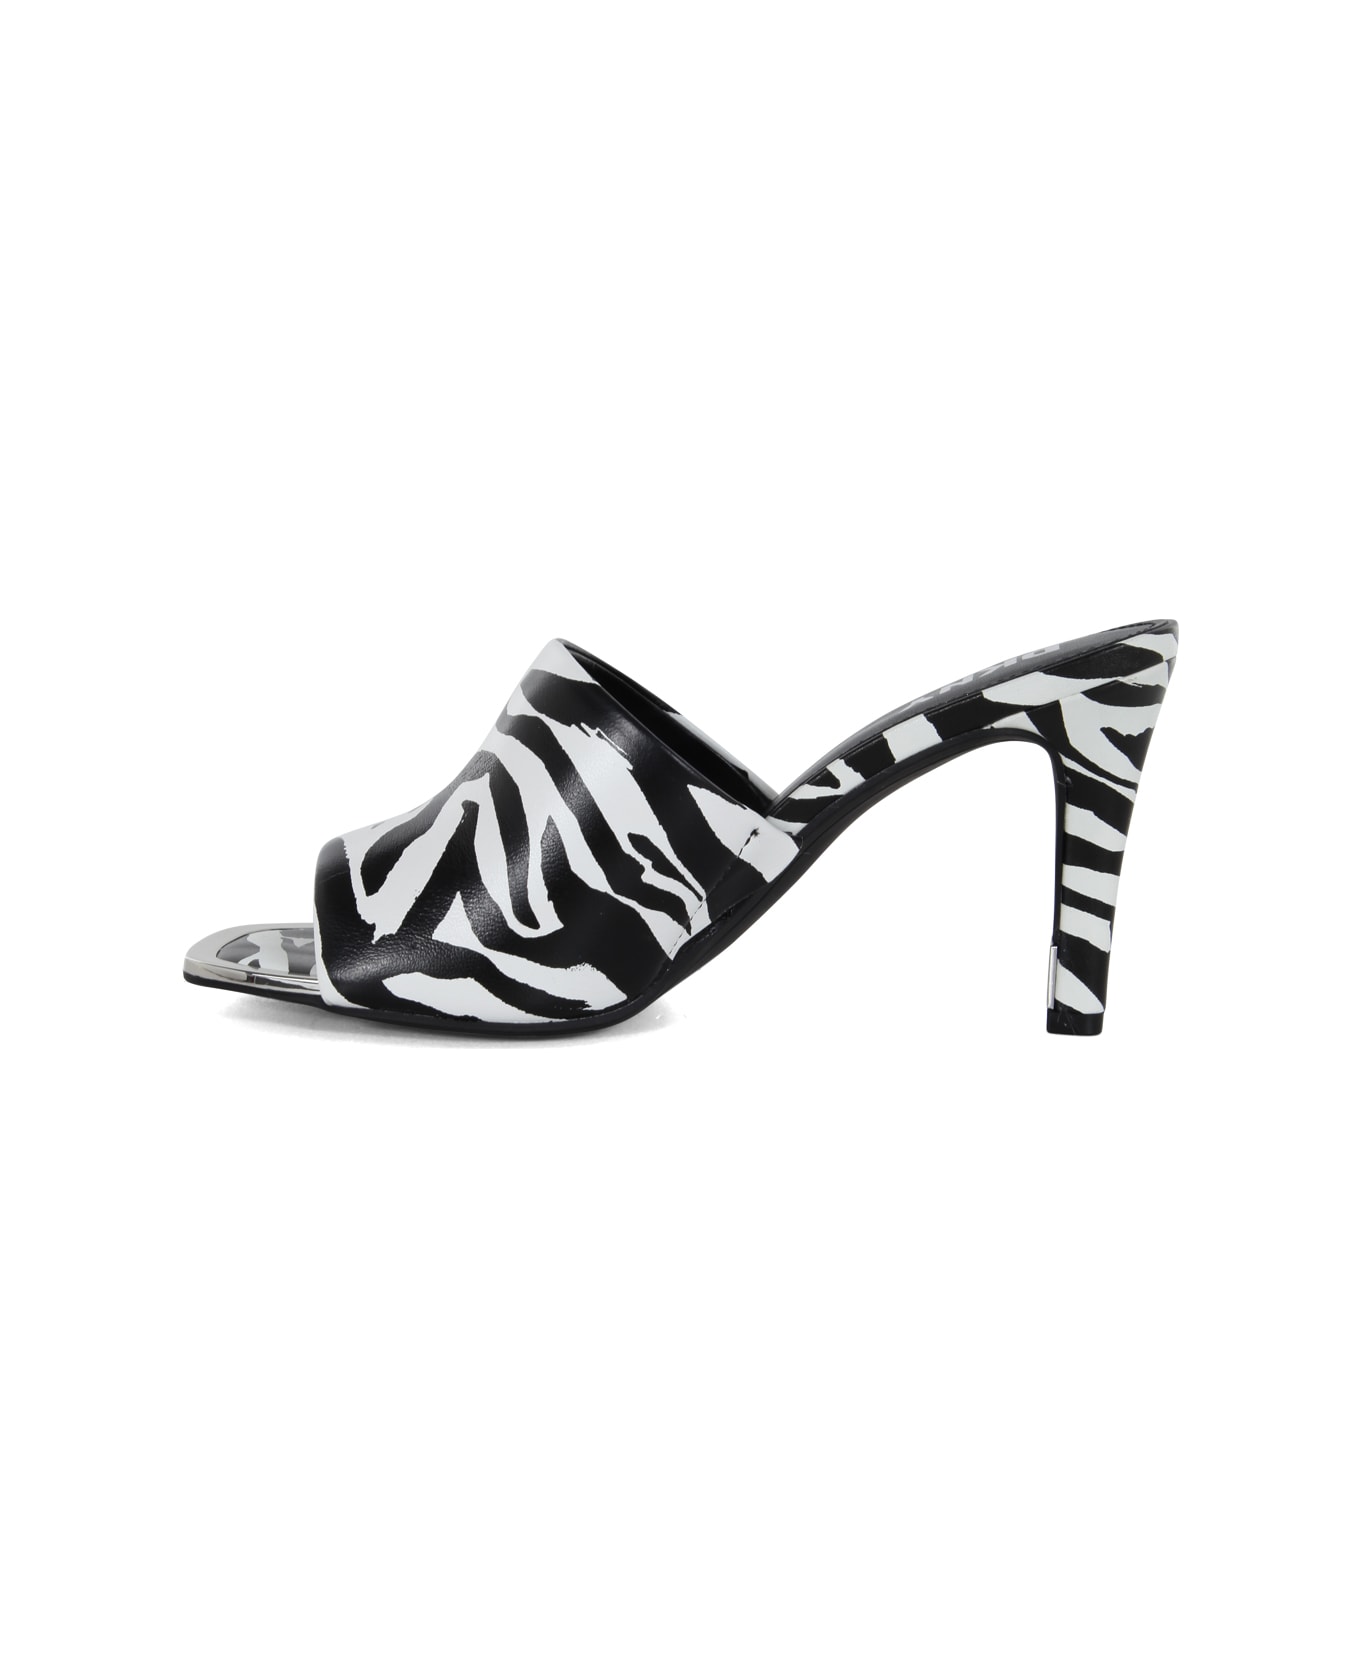 DKNY Dress Shoes Sandal Mule 90mm - Black White サンダル